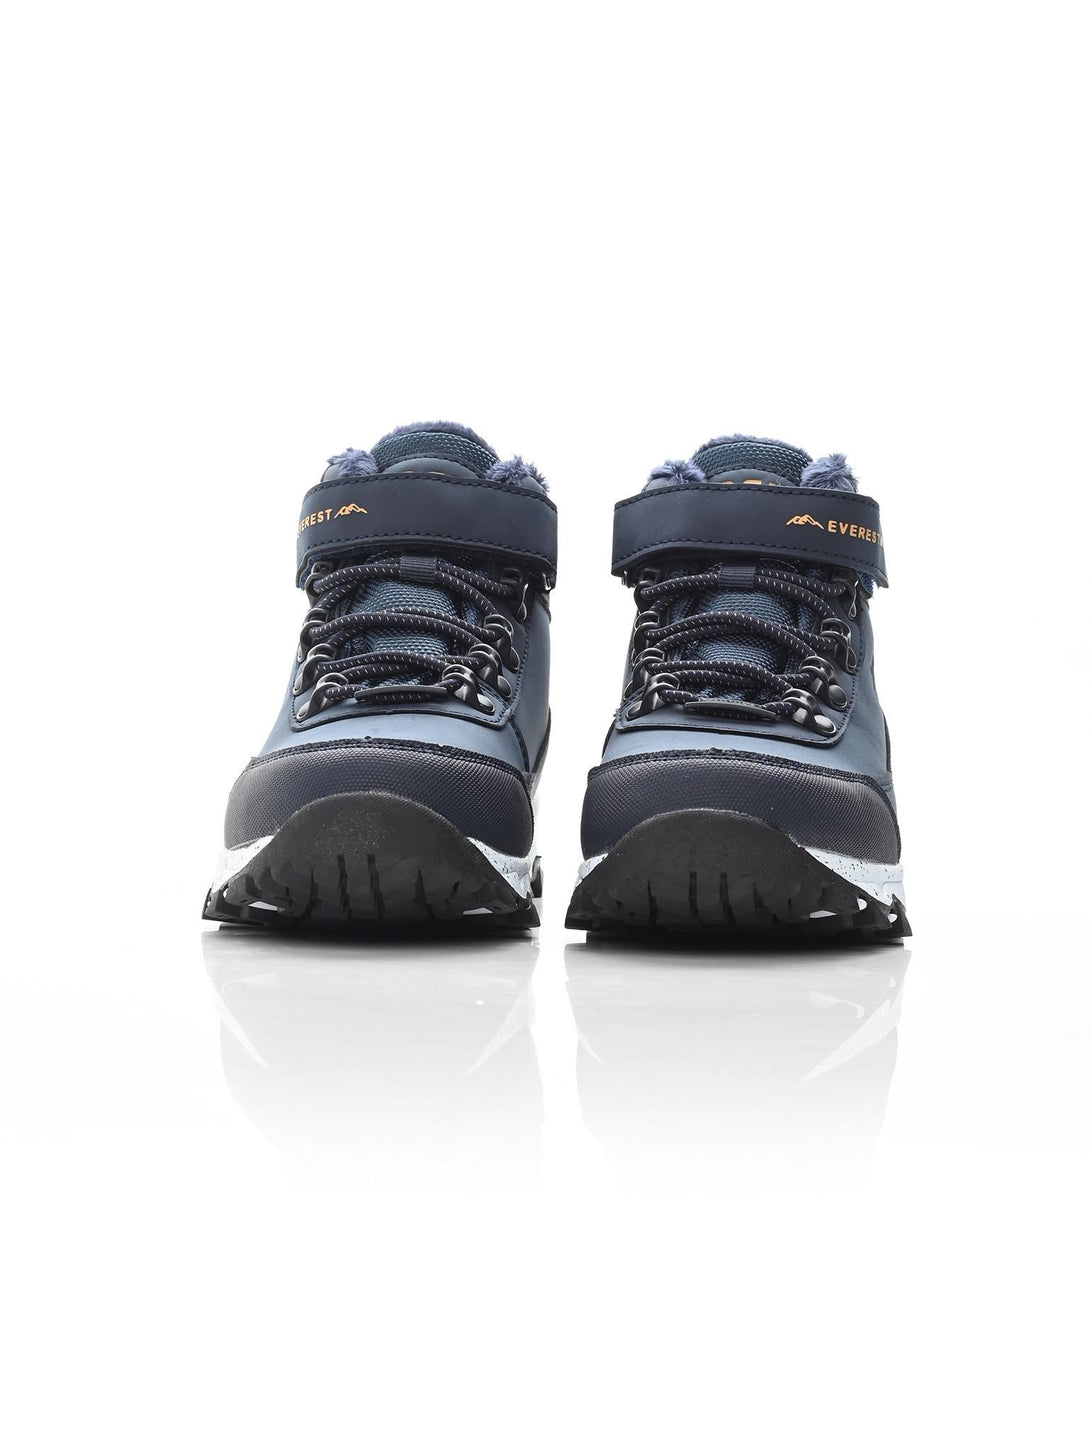 Dorko Everest cipő, gyerek - Sportmania.hu